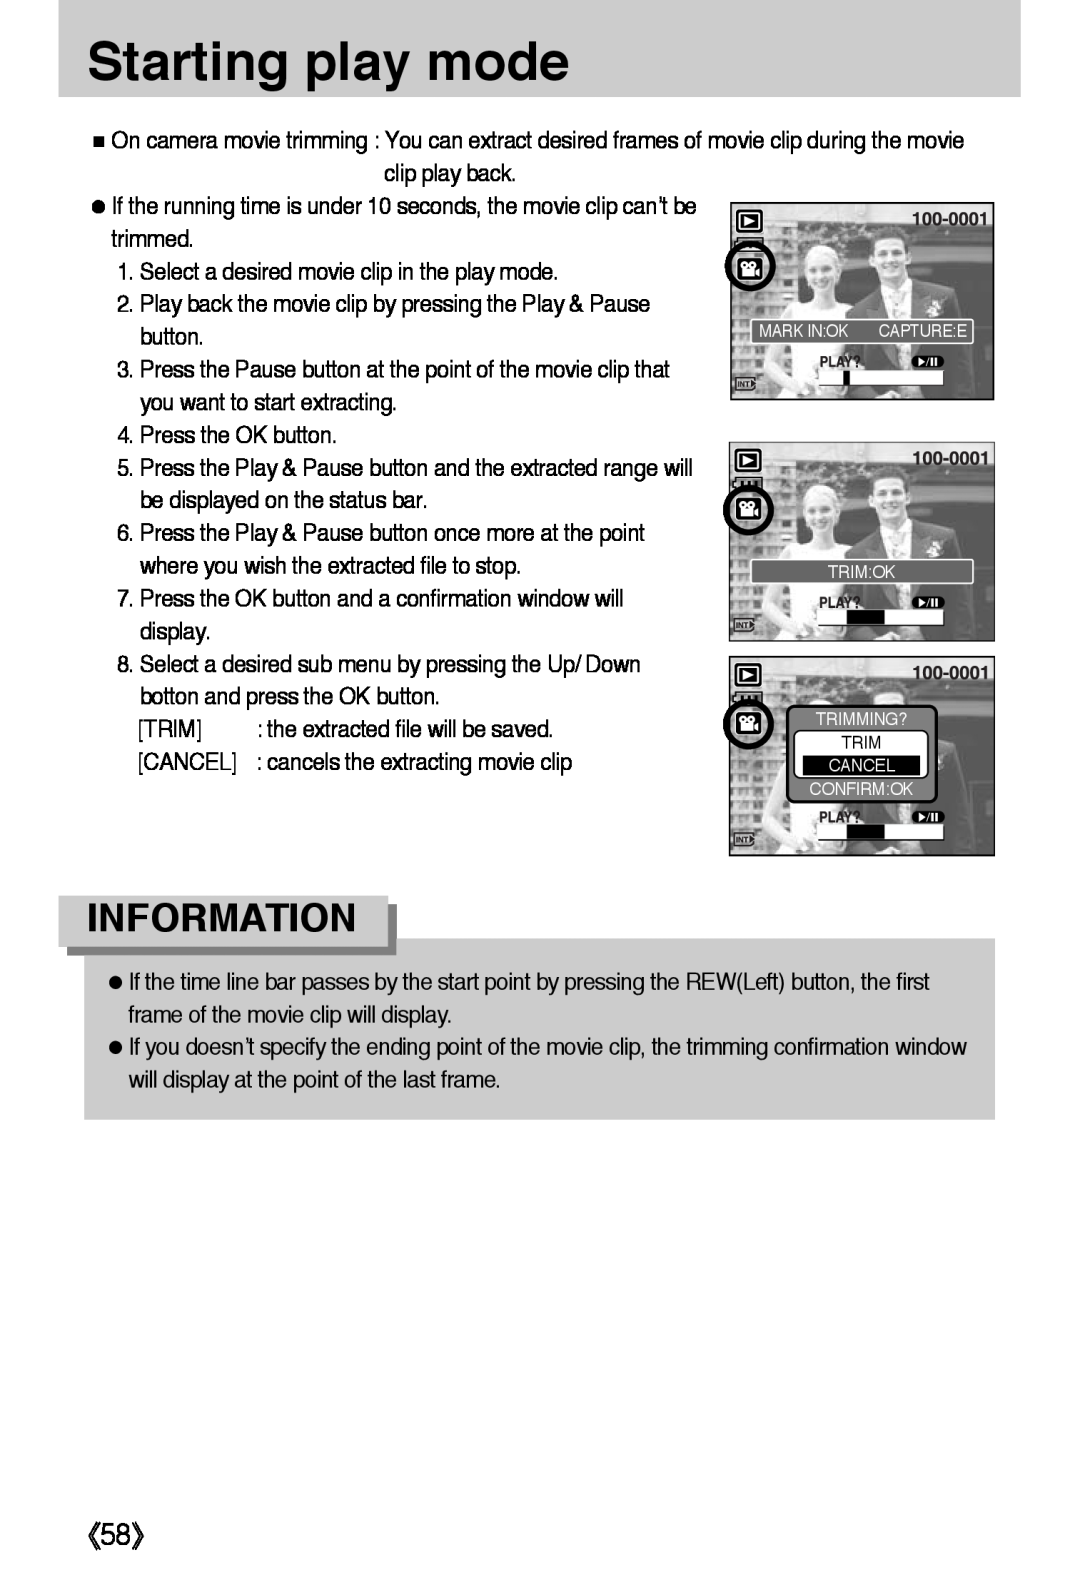 Samsung L50 user manual 《58》, Starting play mode, Information 